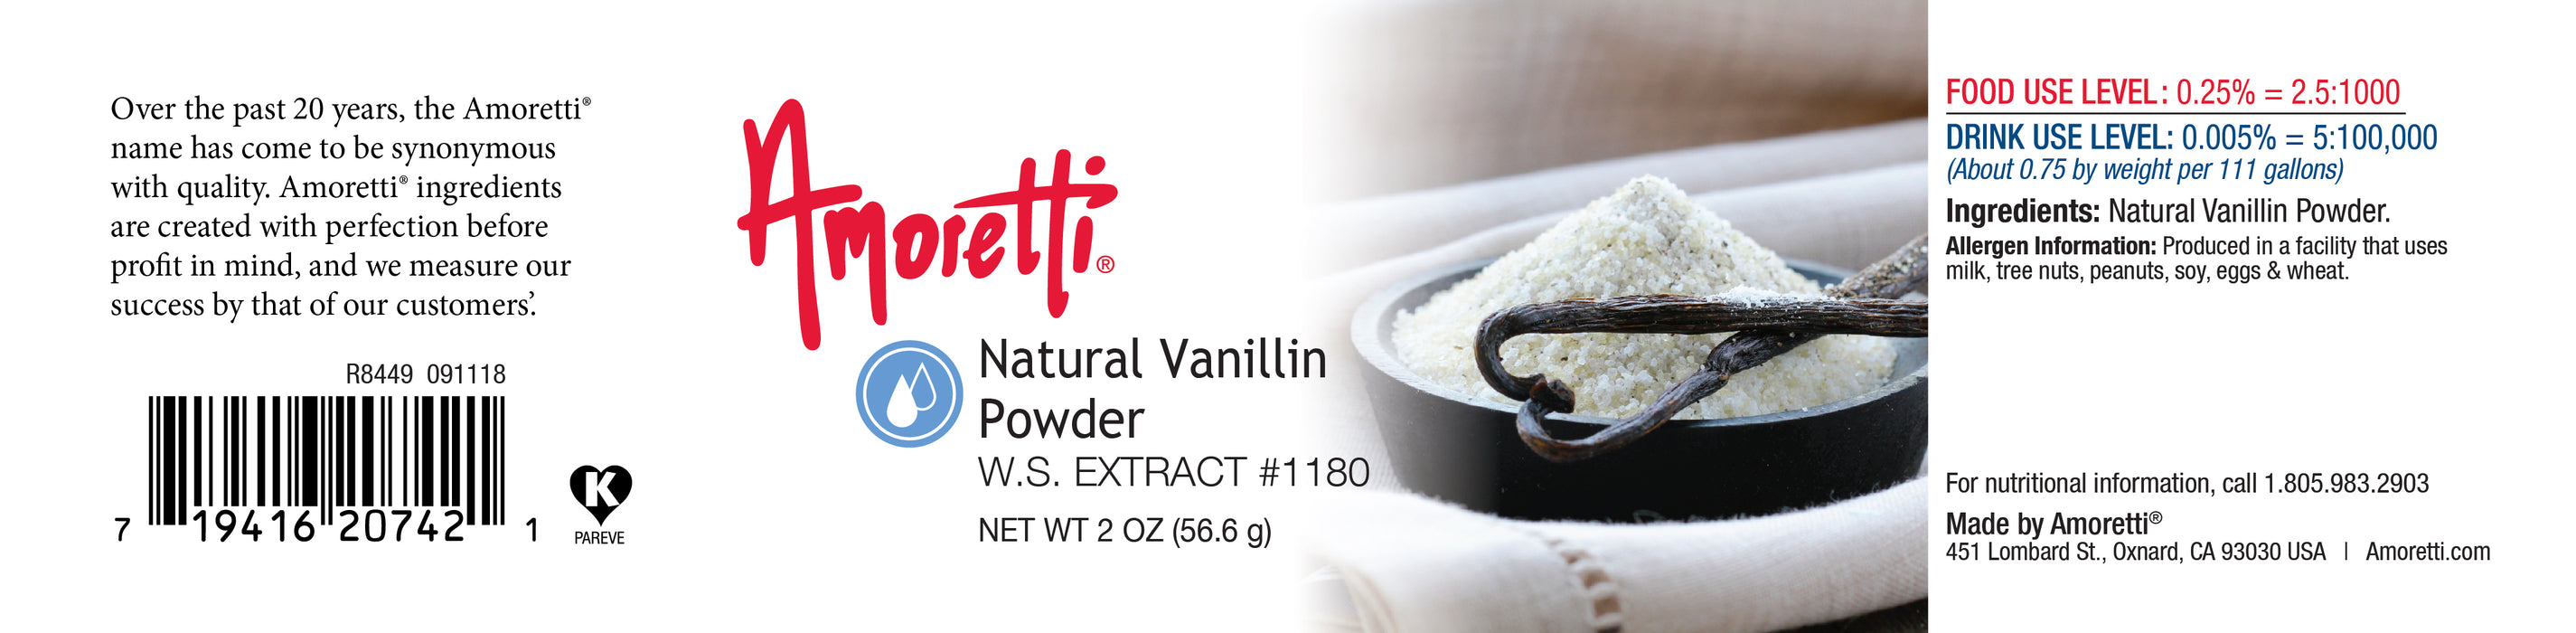 Natural Vanillin Powder Water Soluble